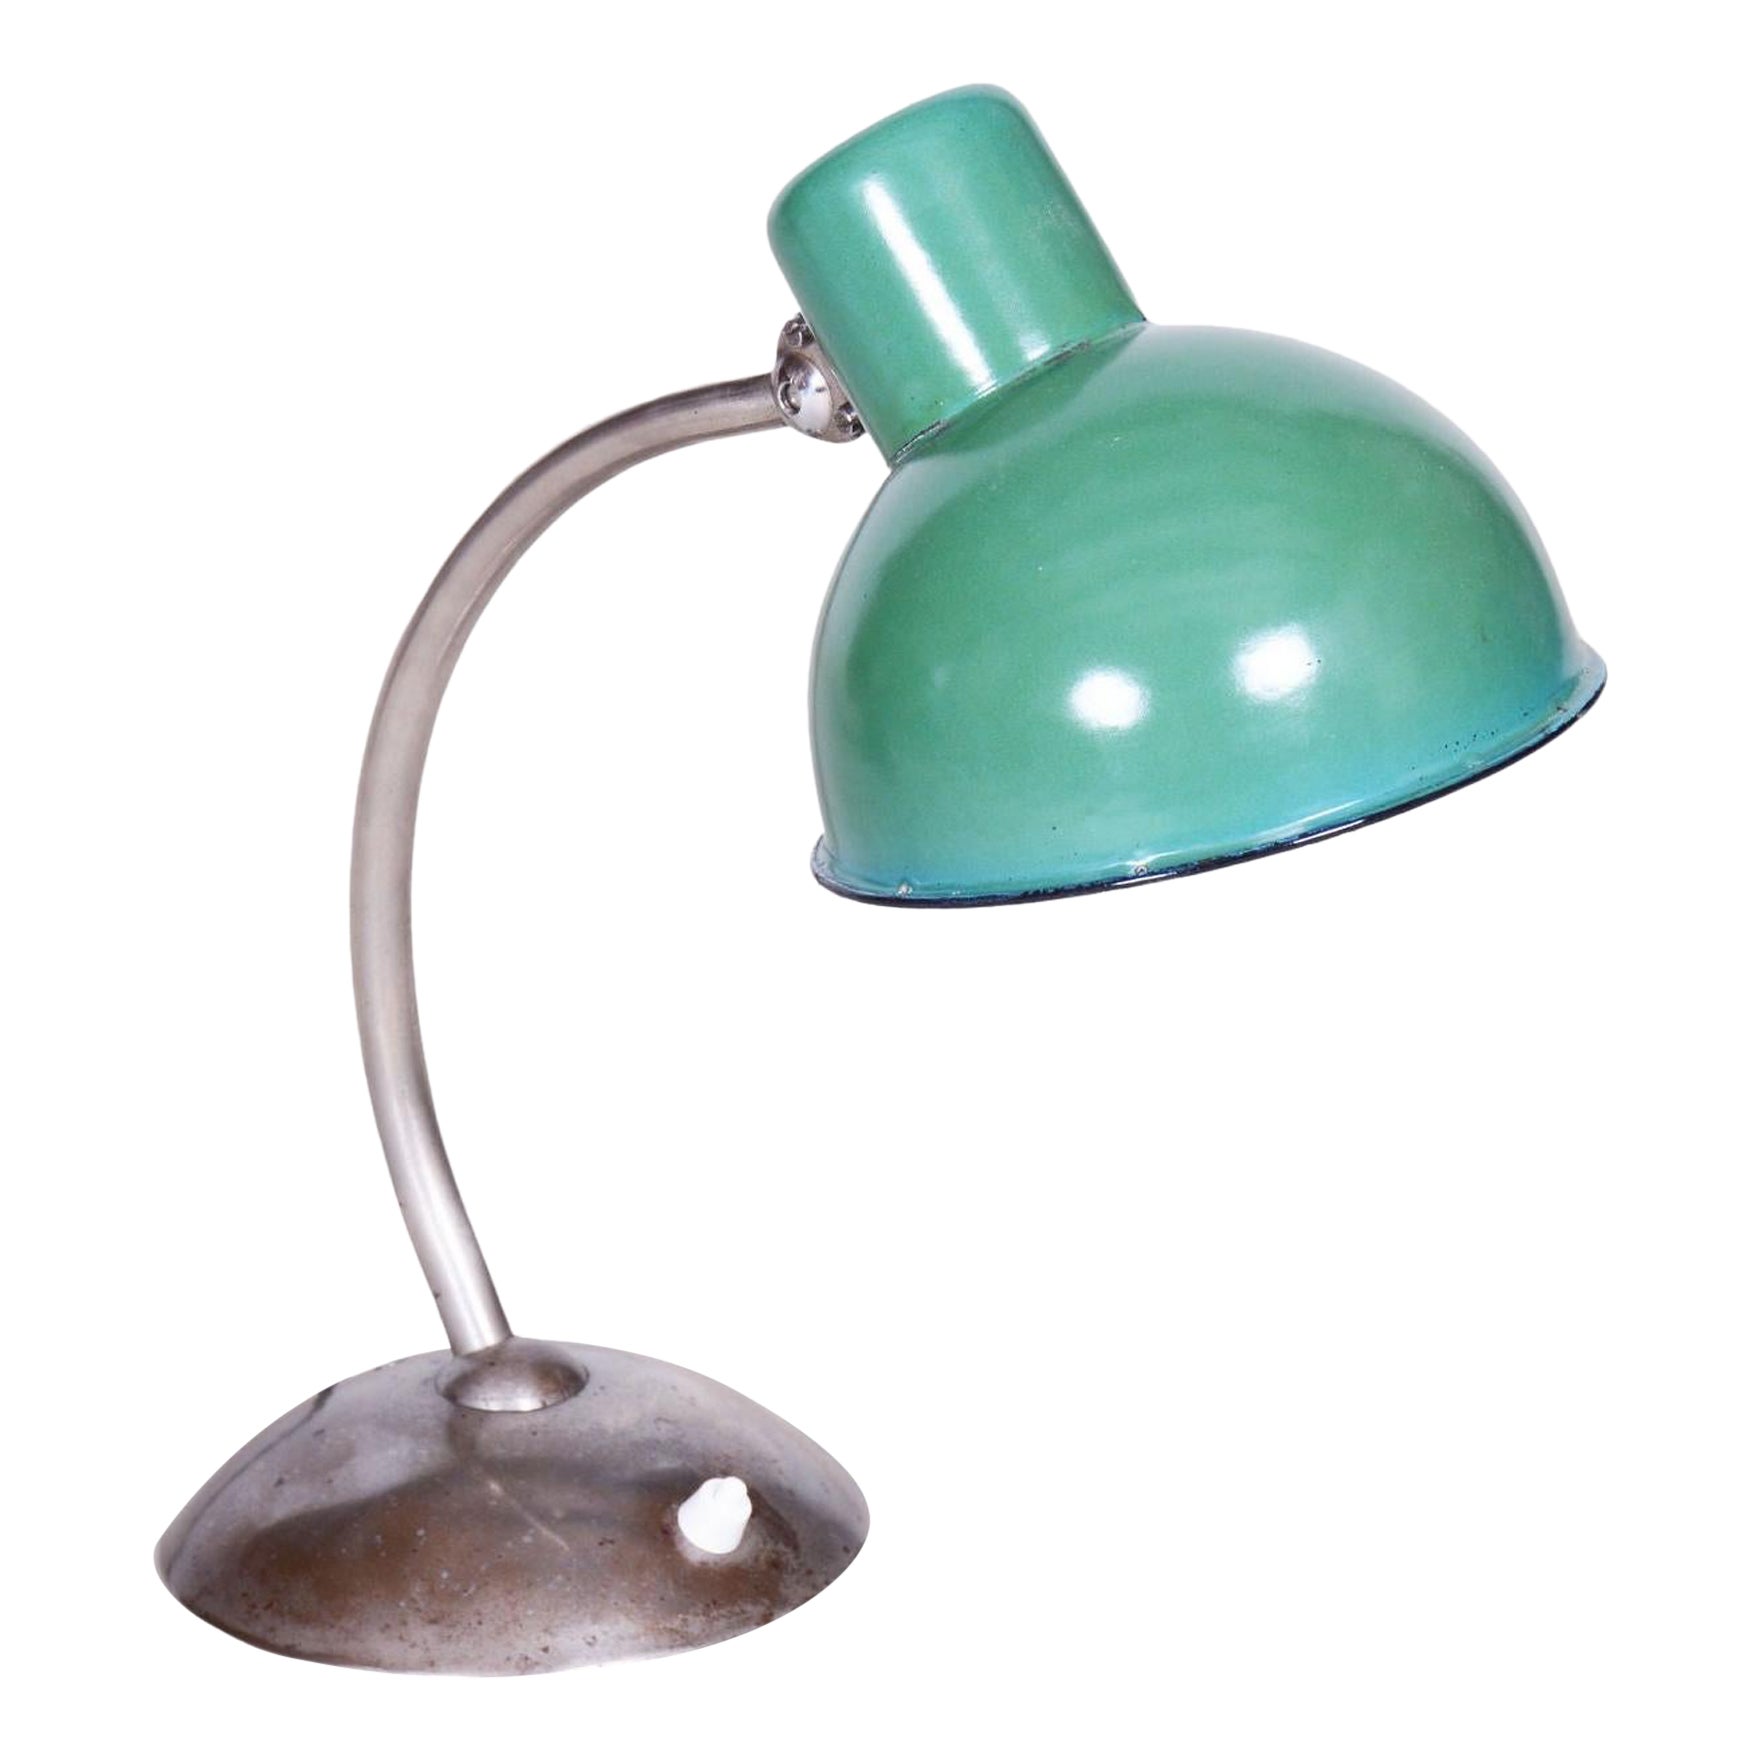 Restored Bauhaus Table Lamp, New Electrification, Chrome, Czechia, 1930s For Sale